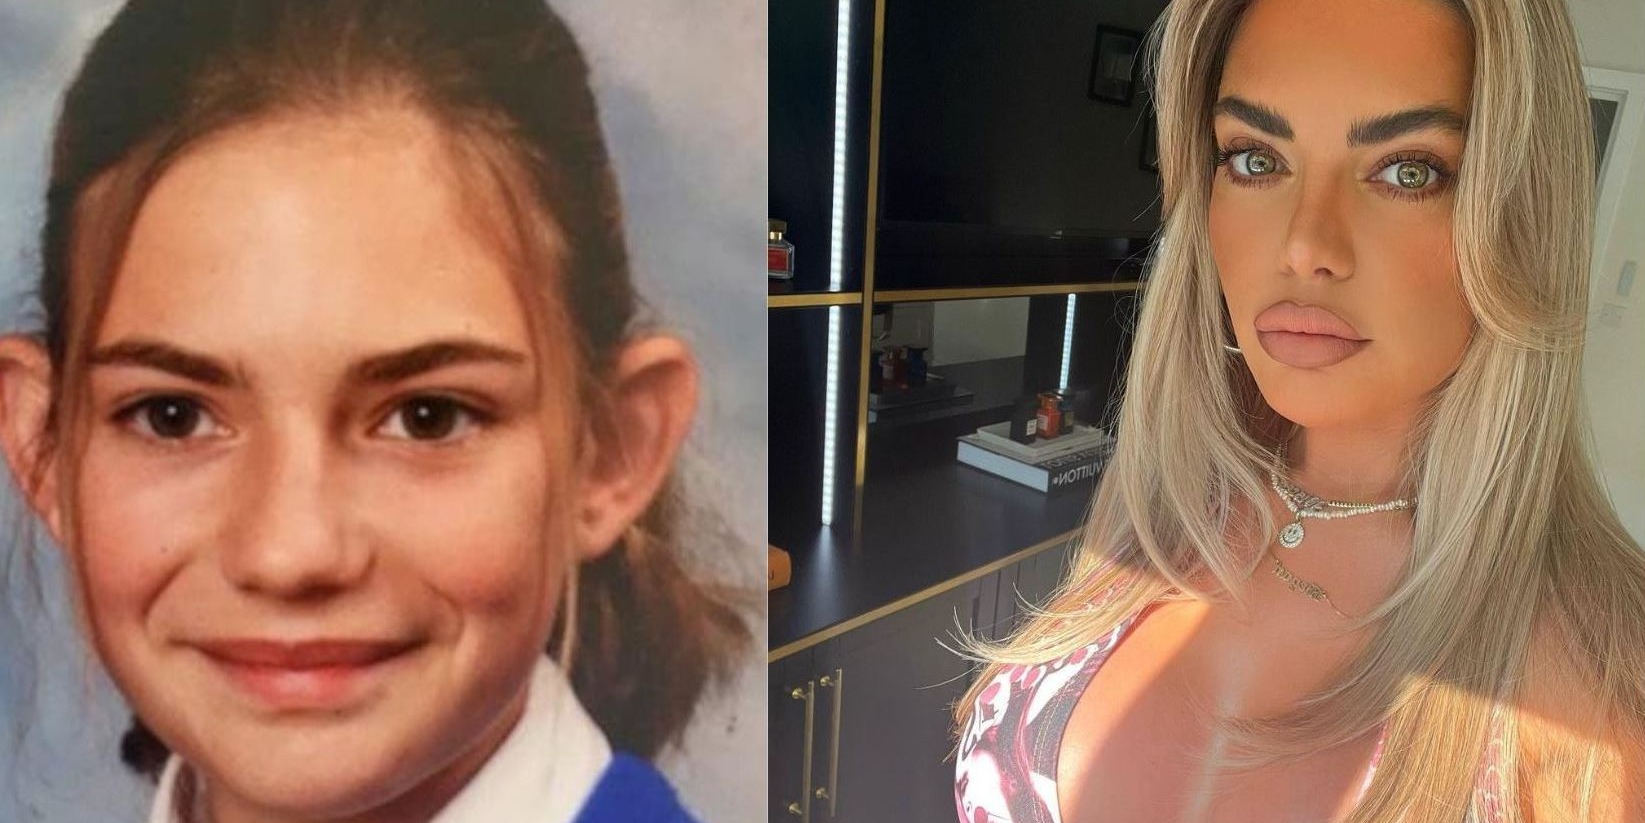 Megan Barton Hanson Before (L) and After (R) (Credits: Instagram/@meganbartonhanson)